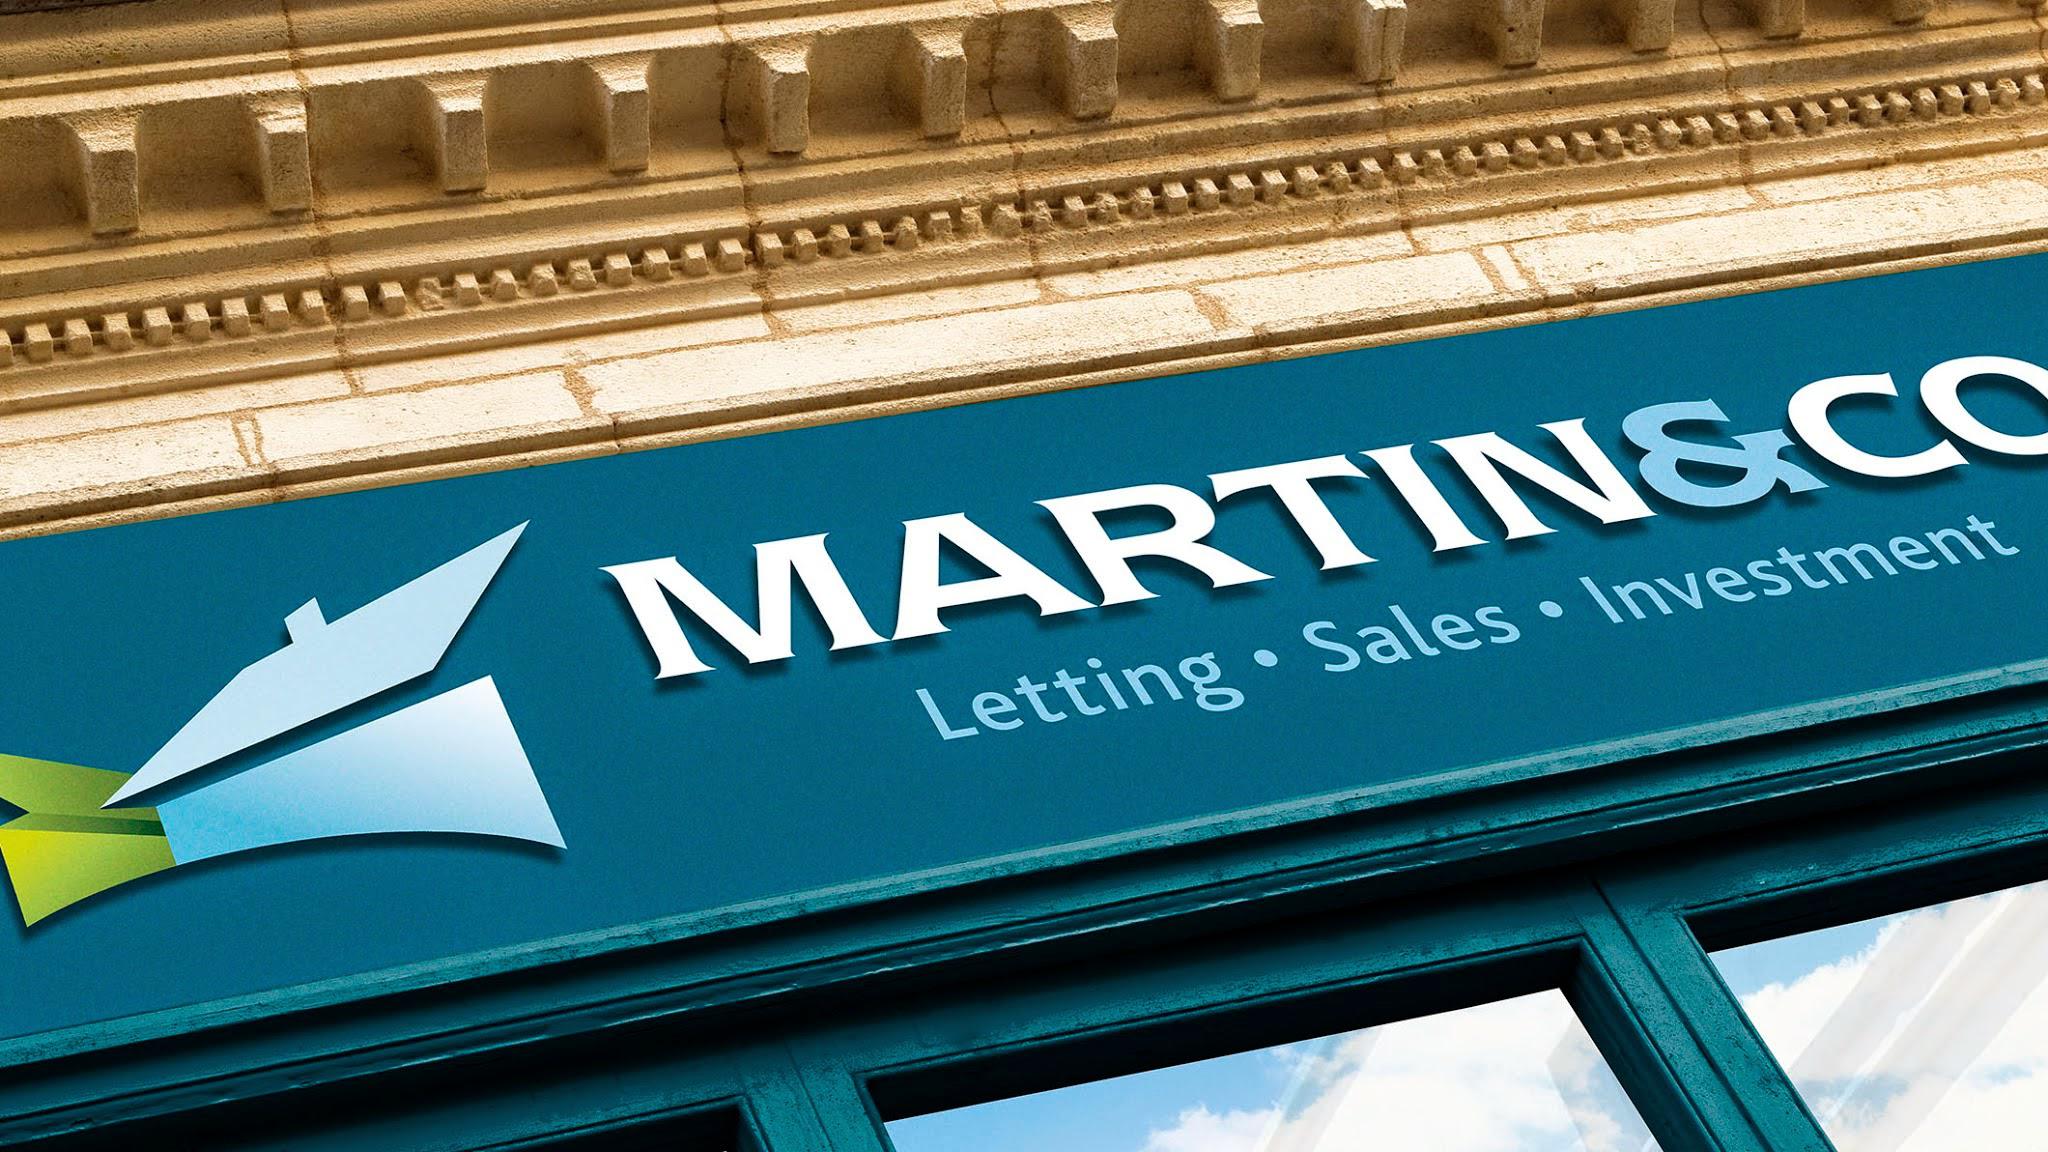 Images Martin & Co Gainsborough Lettings & Estate Agents